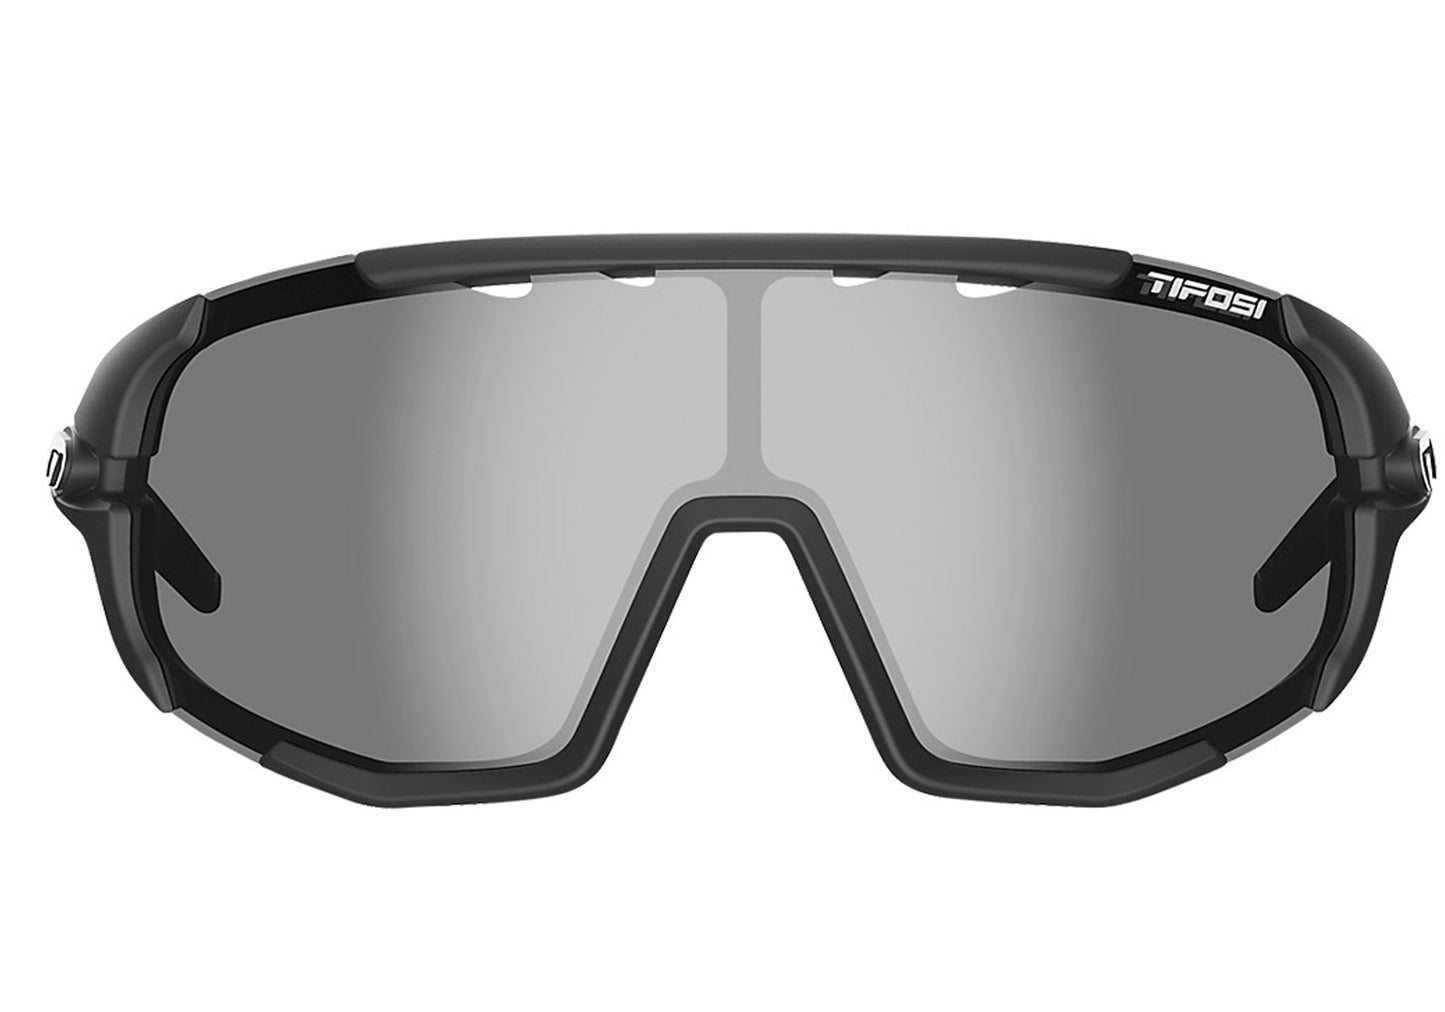 Tifosi Sledge Matte Black Sunglasses With 3 Interchangeable Lenses